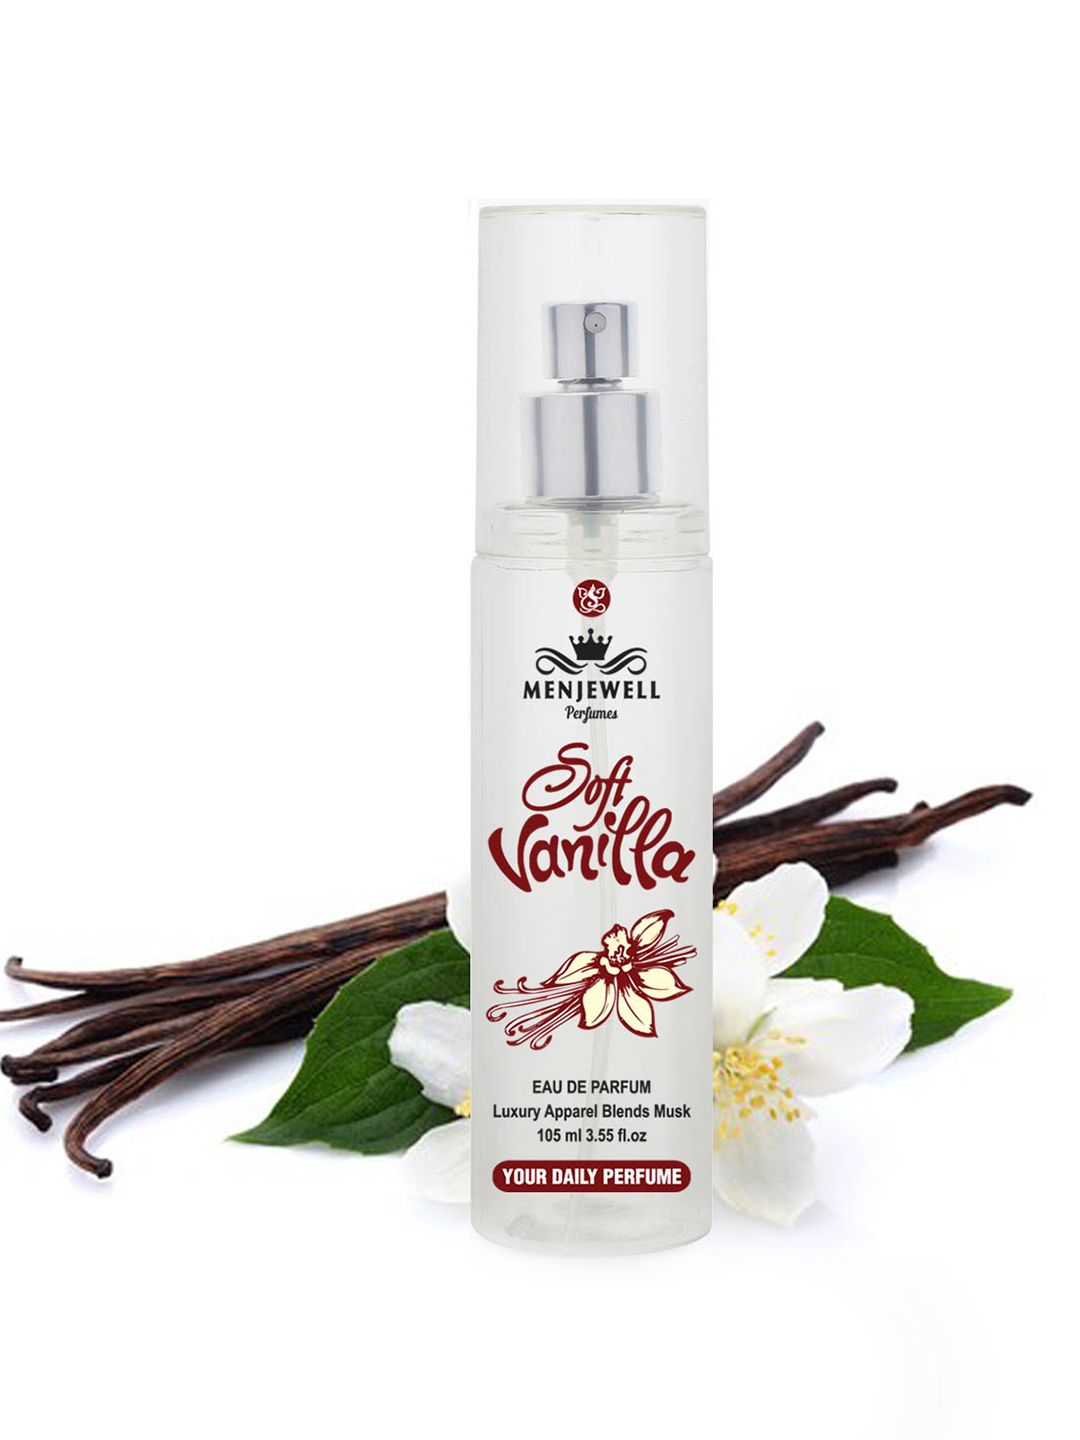 Menjewell Soft Vanilla Eau de Parfum - 105ml Price in India